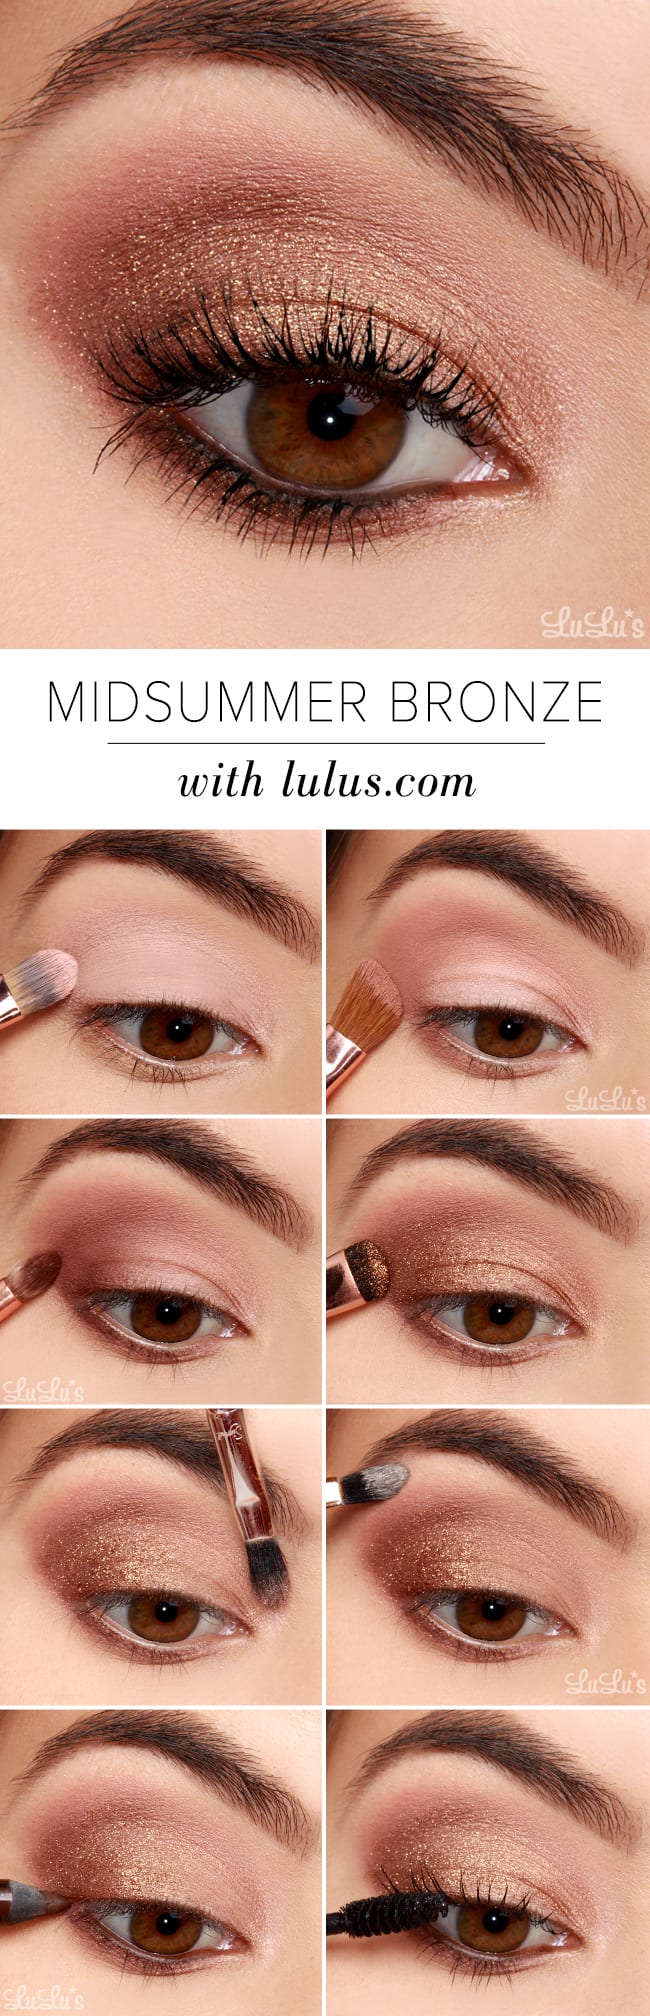 Lulus How-To: Midsummer Bronze Eyeshadow Tutorial - Lulus.com Fashion Blog